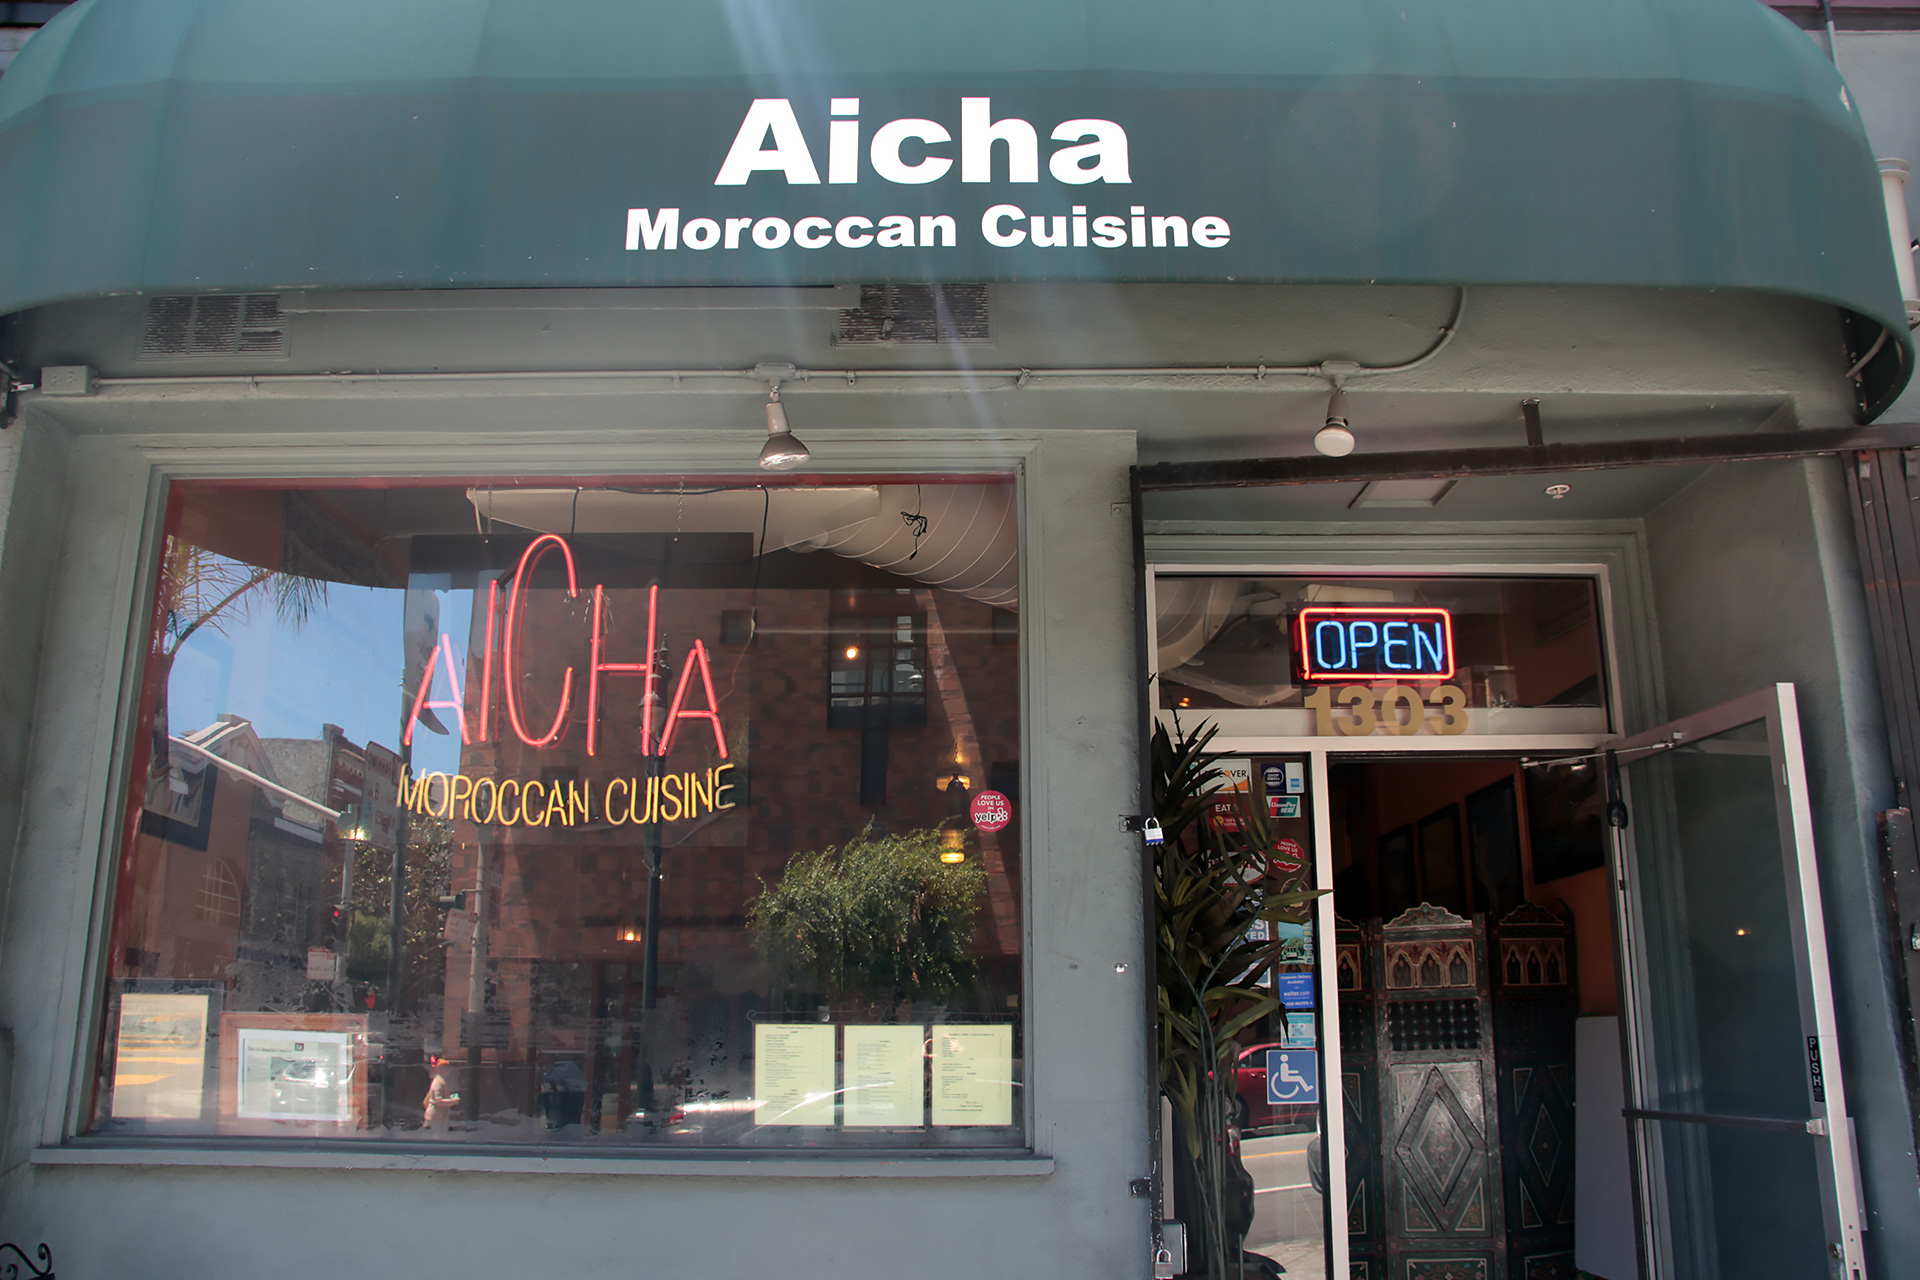 Aicha Moroccan Cuisine exterior.